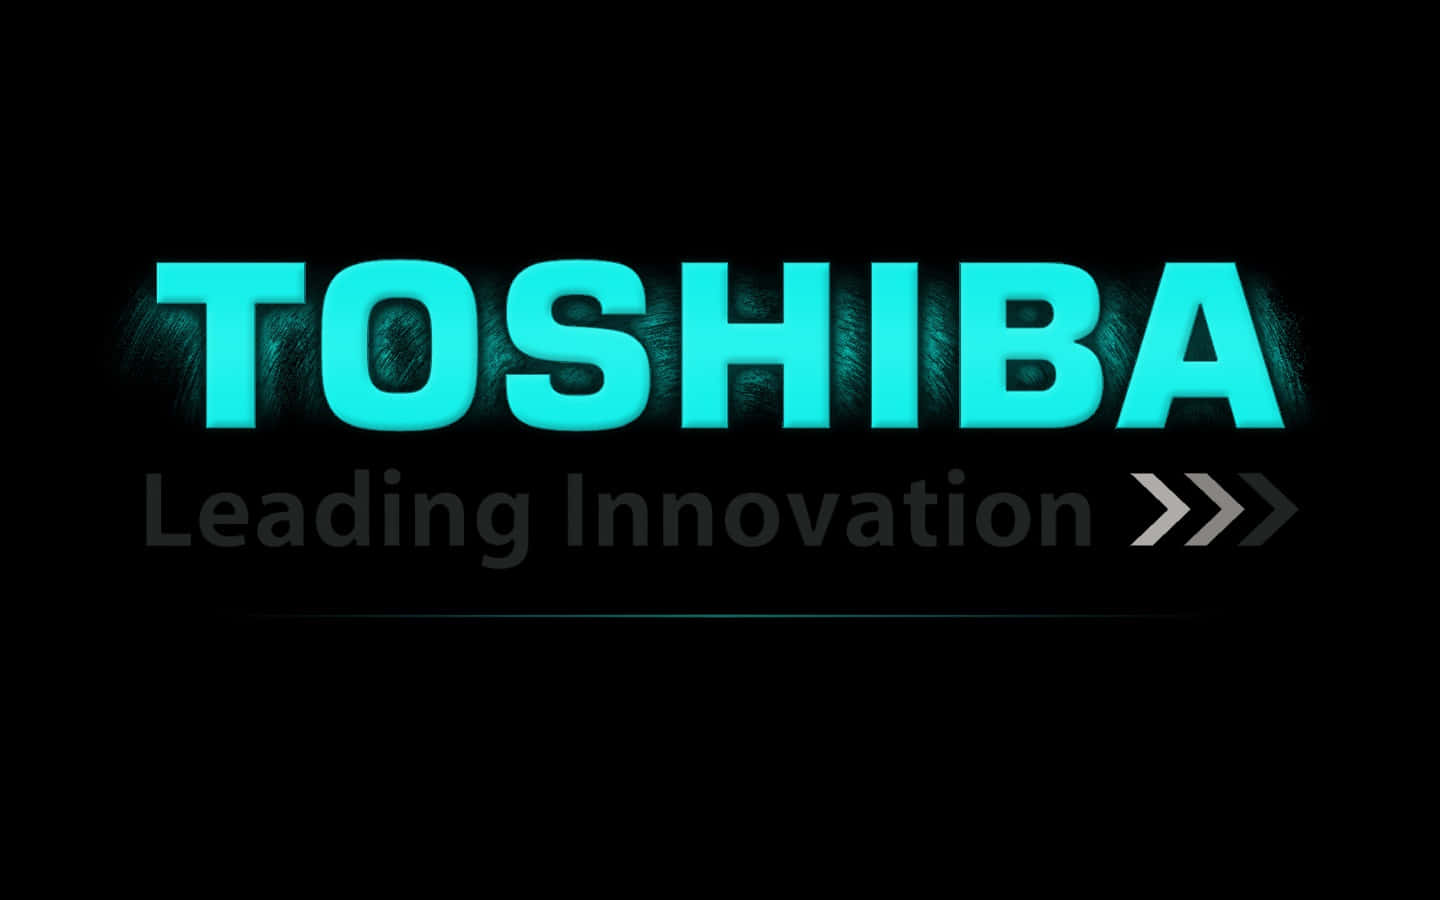 toshiba leading innovation logo